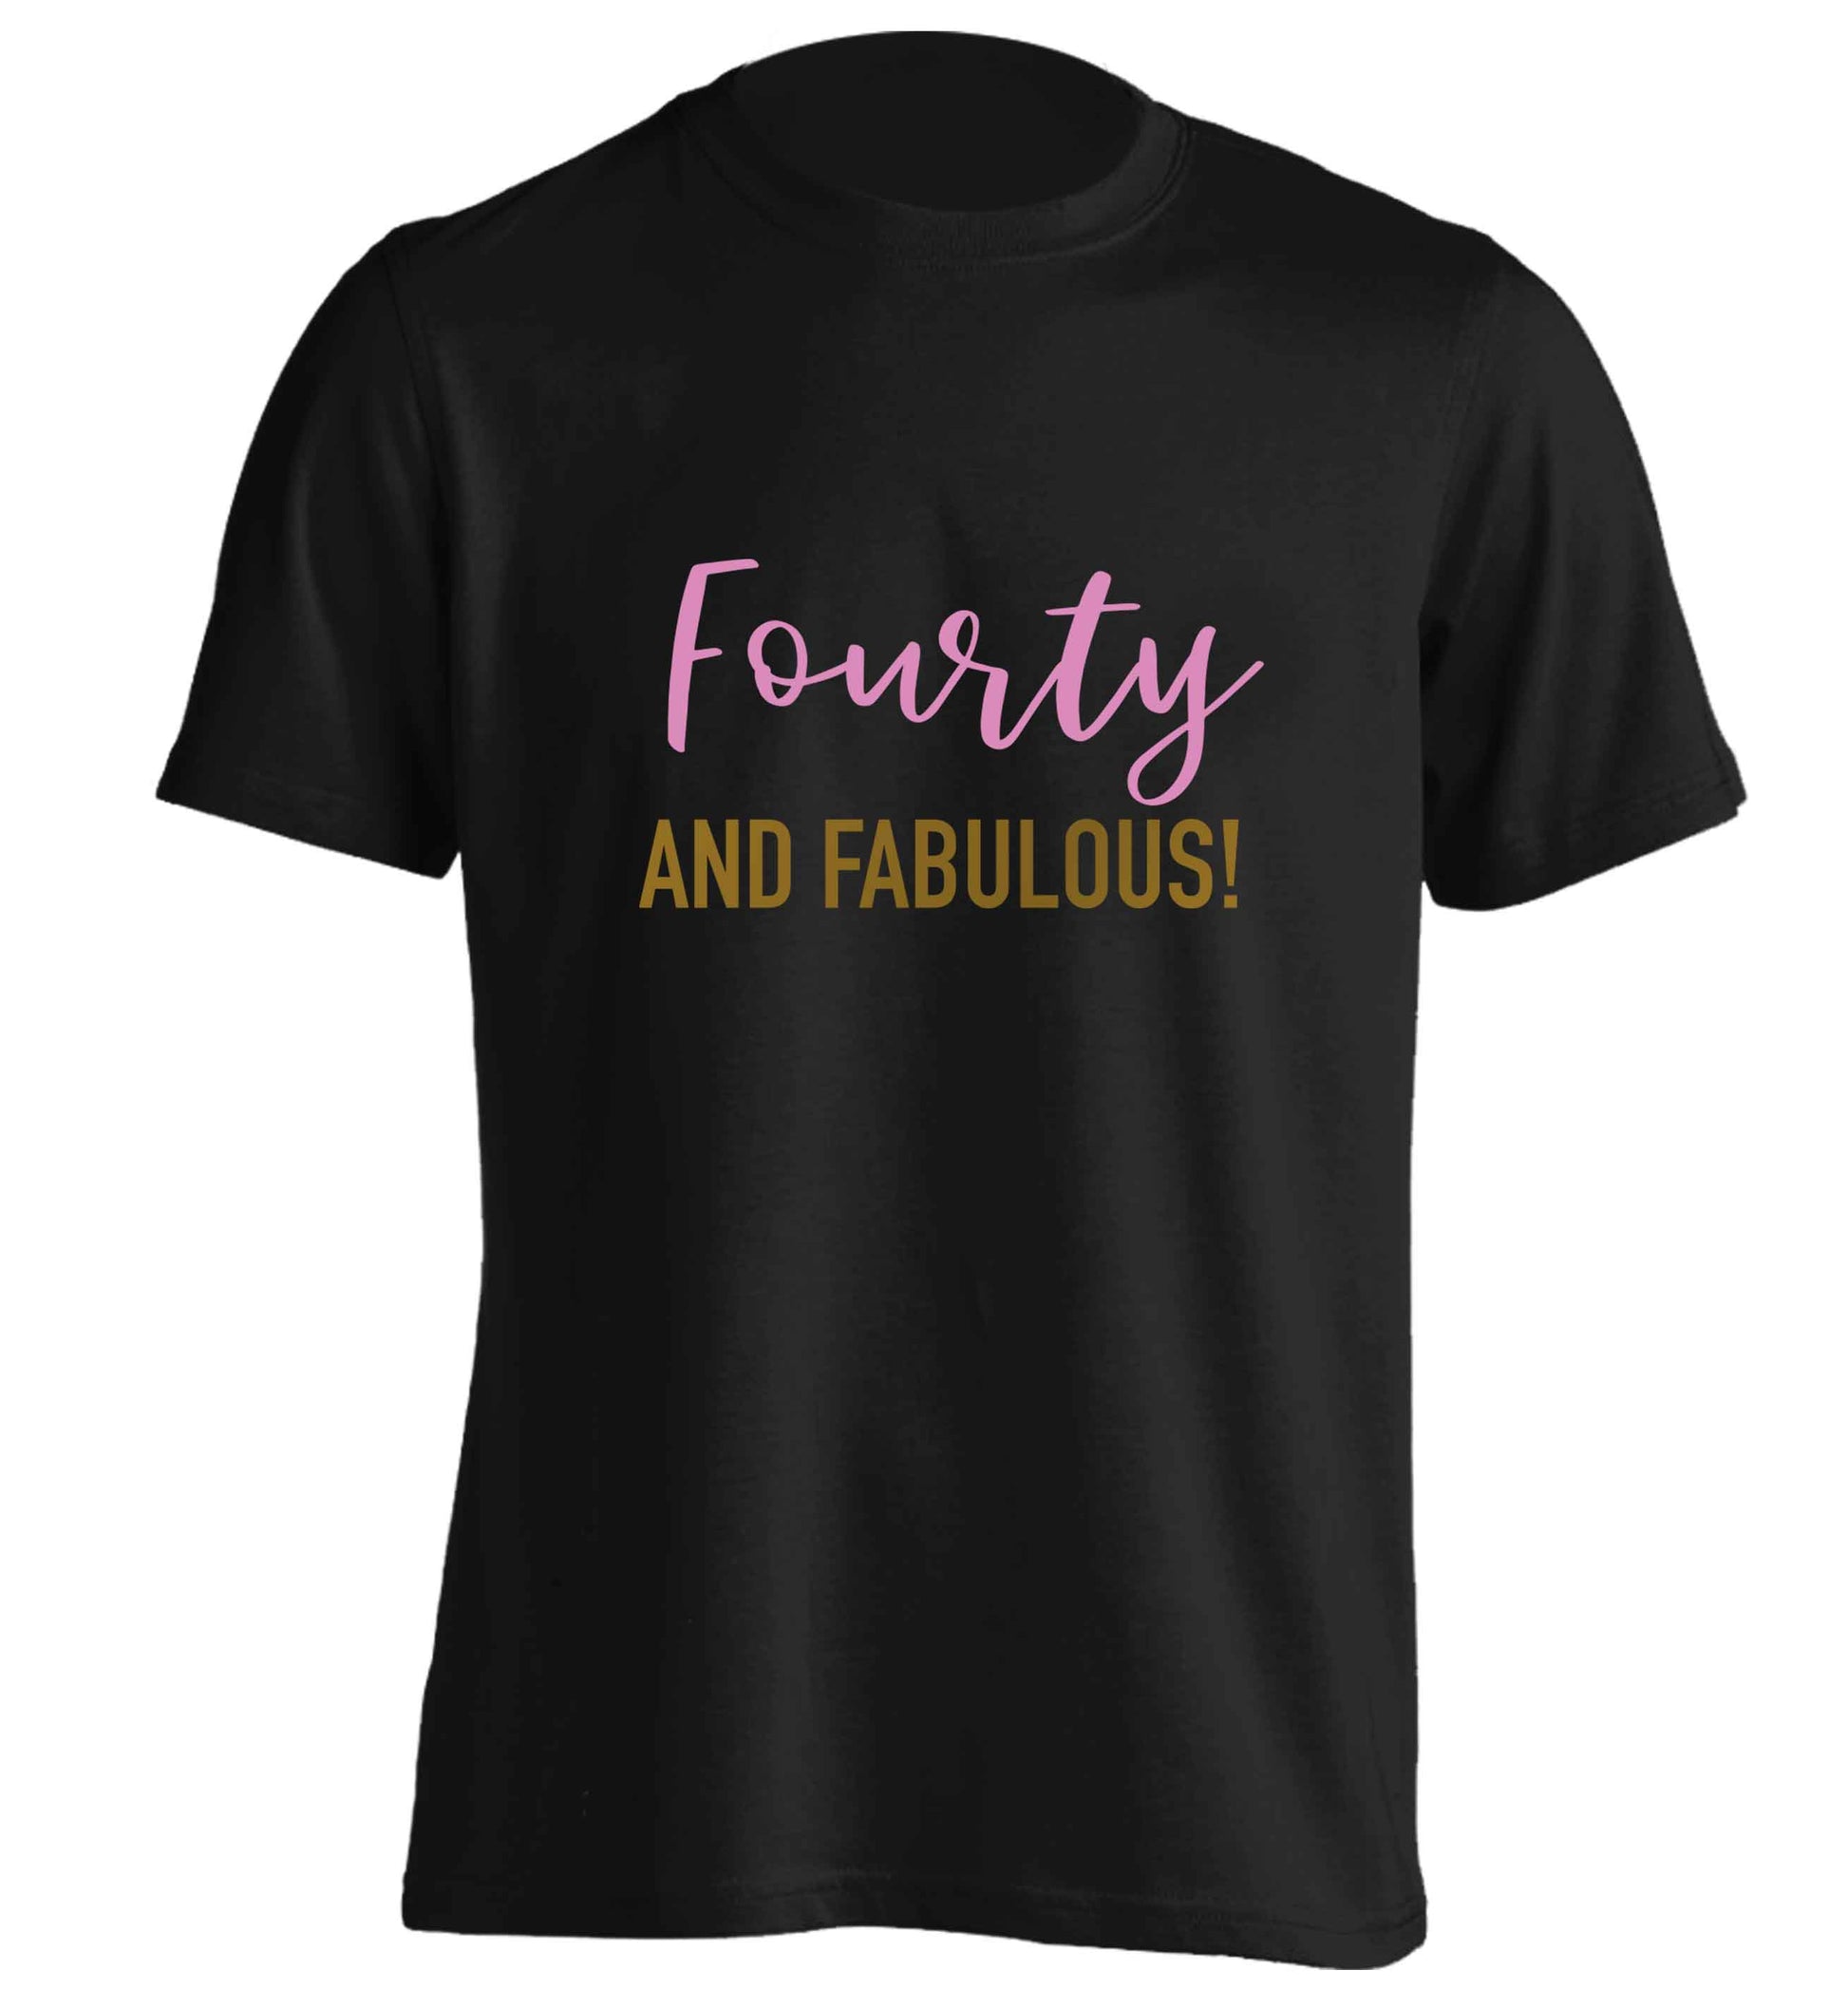 Fourty and fabulous adults unisex black Tshirt 2XL